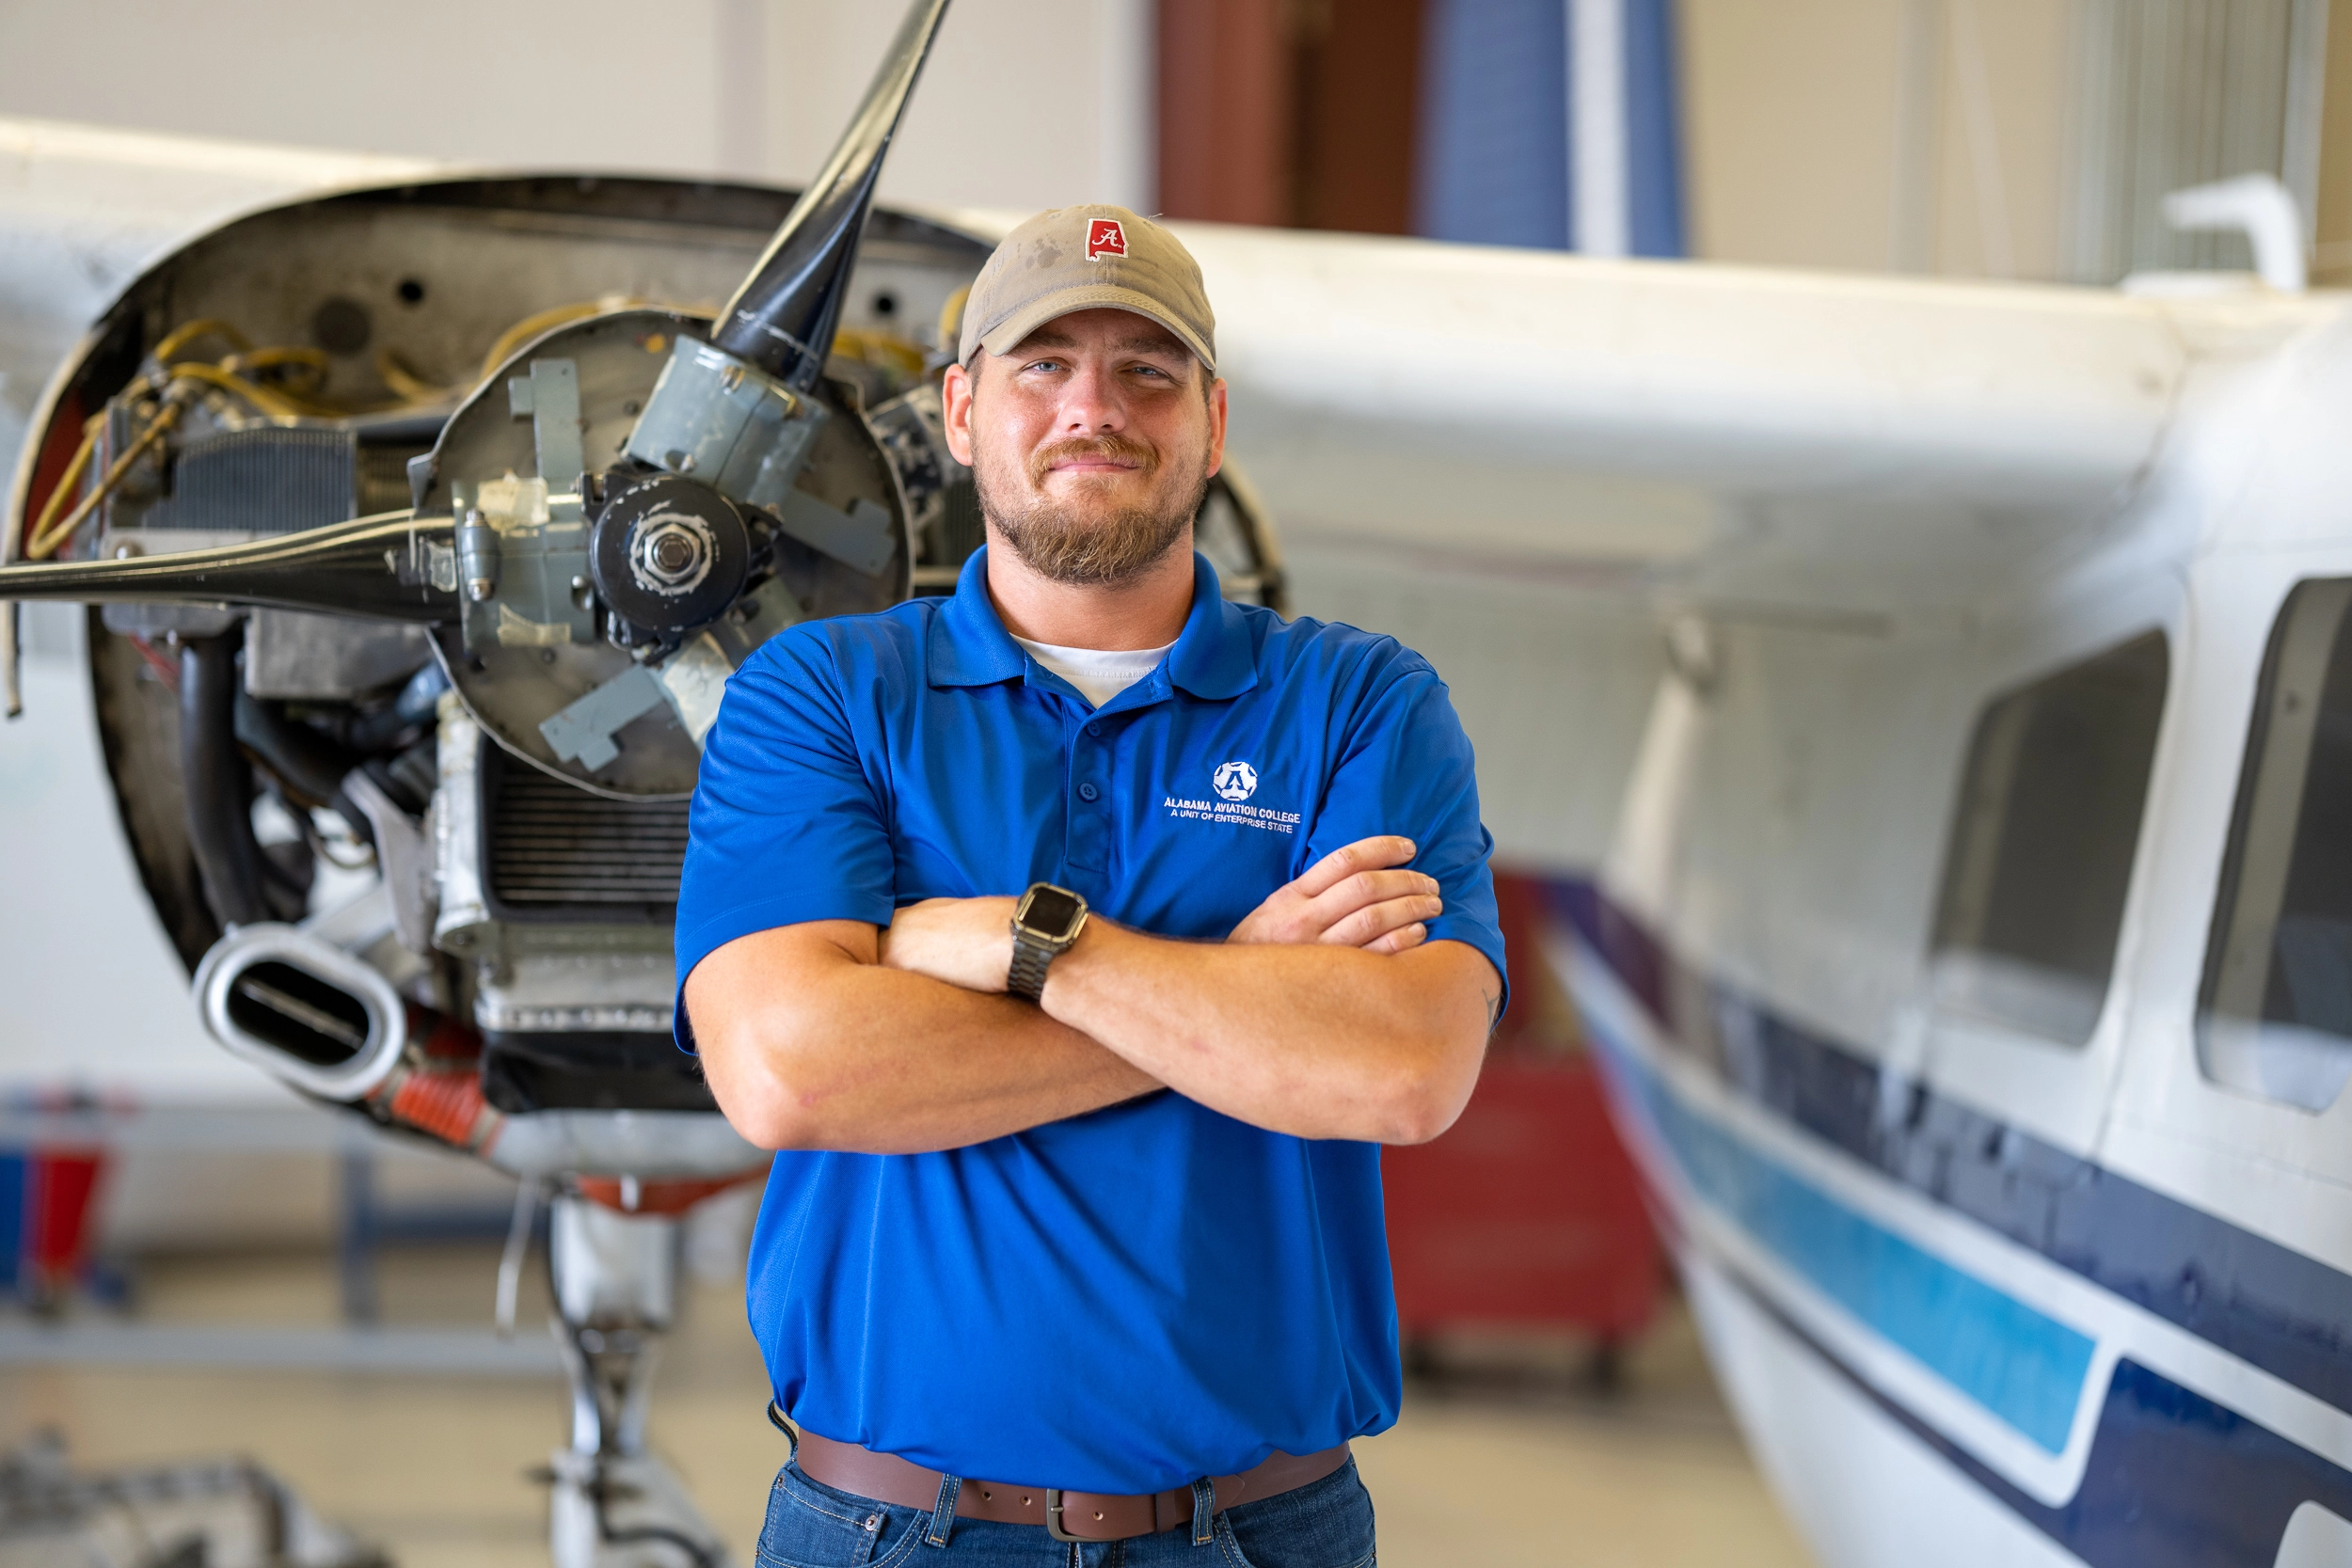 AAC student to receive prestigious aviation maintenance award